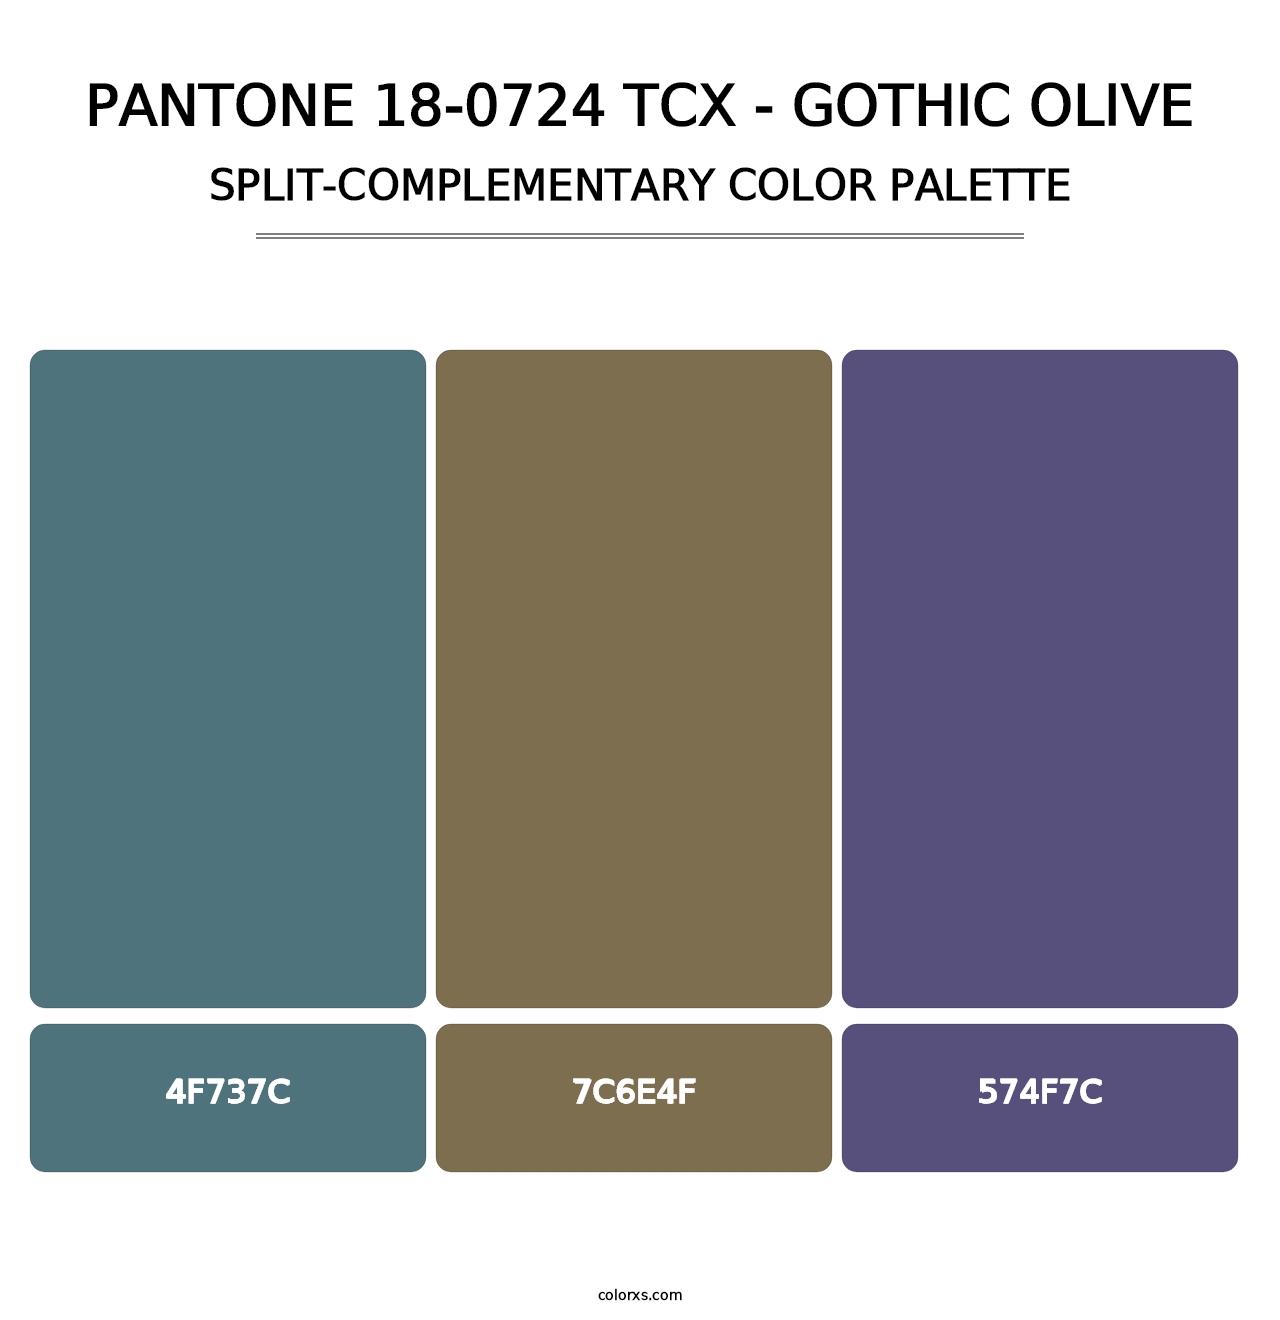 PANTONE 18-0724 TCX - Gothic Olive - Split-Complementary Color Palette